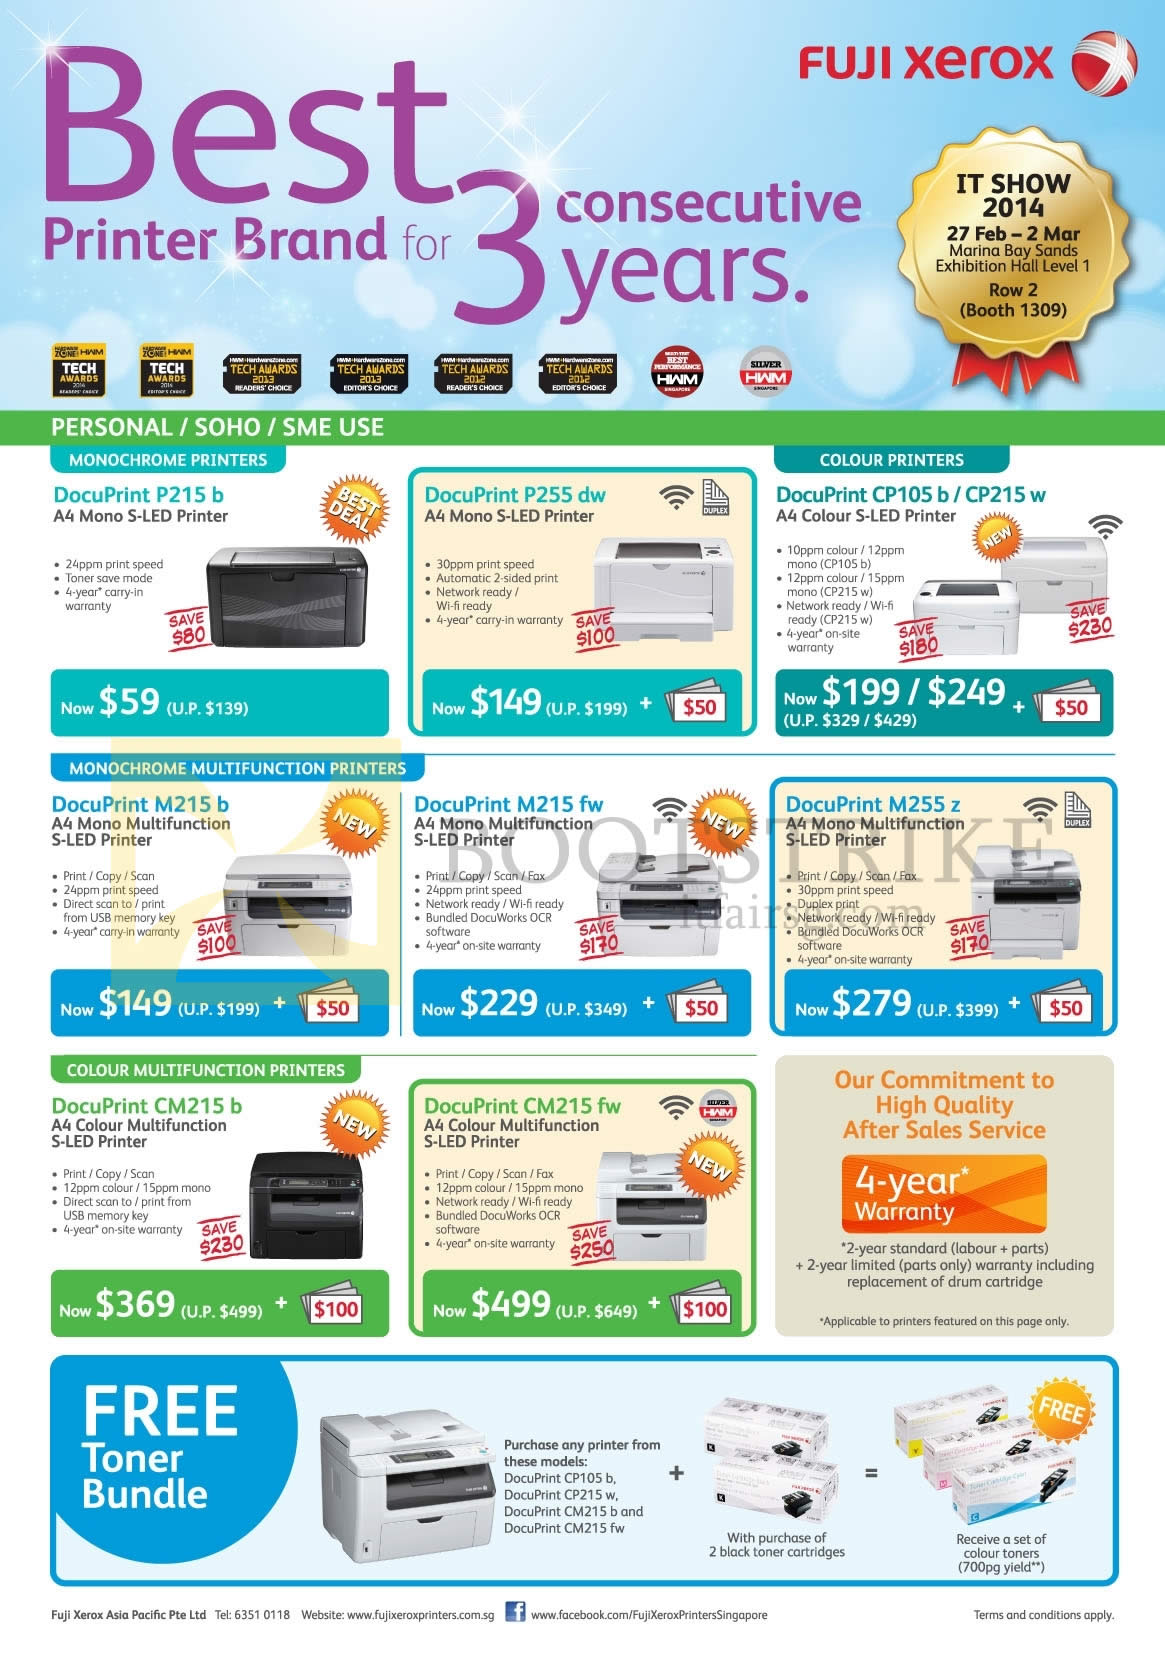 IT SHOW 2014 price list image brochure of Fuji Xerox Printers S-LED DocuPrint P215b, P255dw, CP105b, CP215w, M215b, M215fw, M255z, CM215b, CM215fw